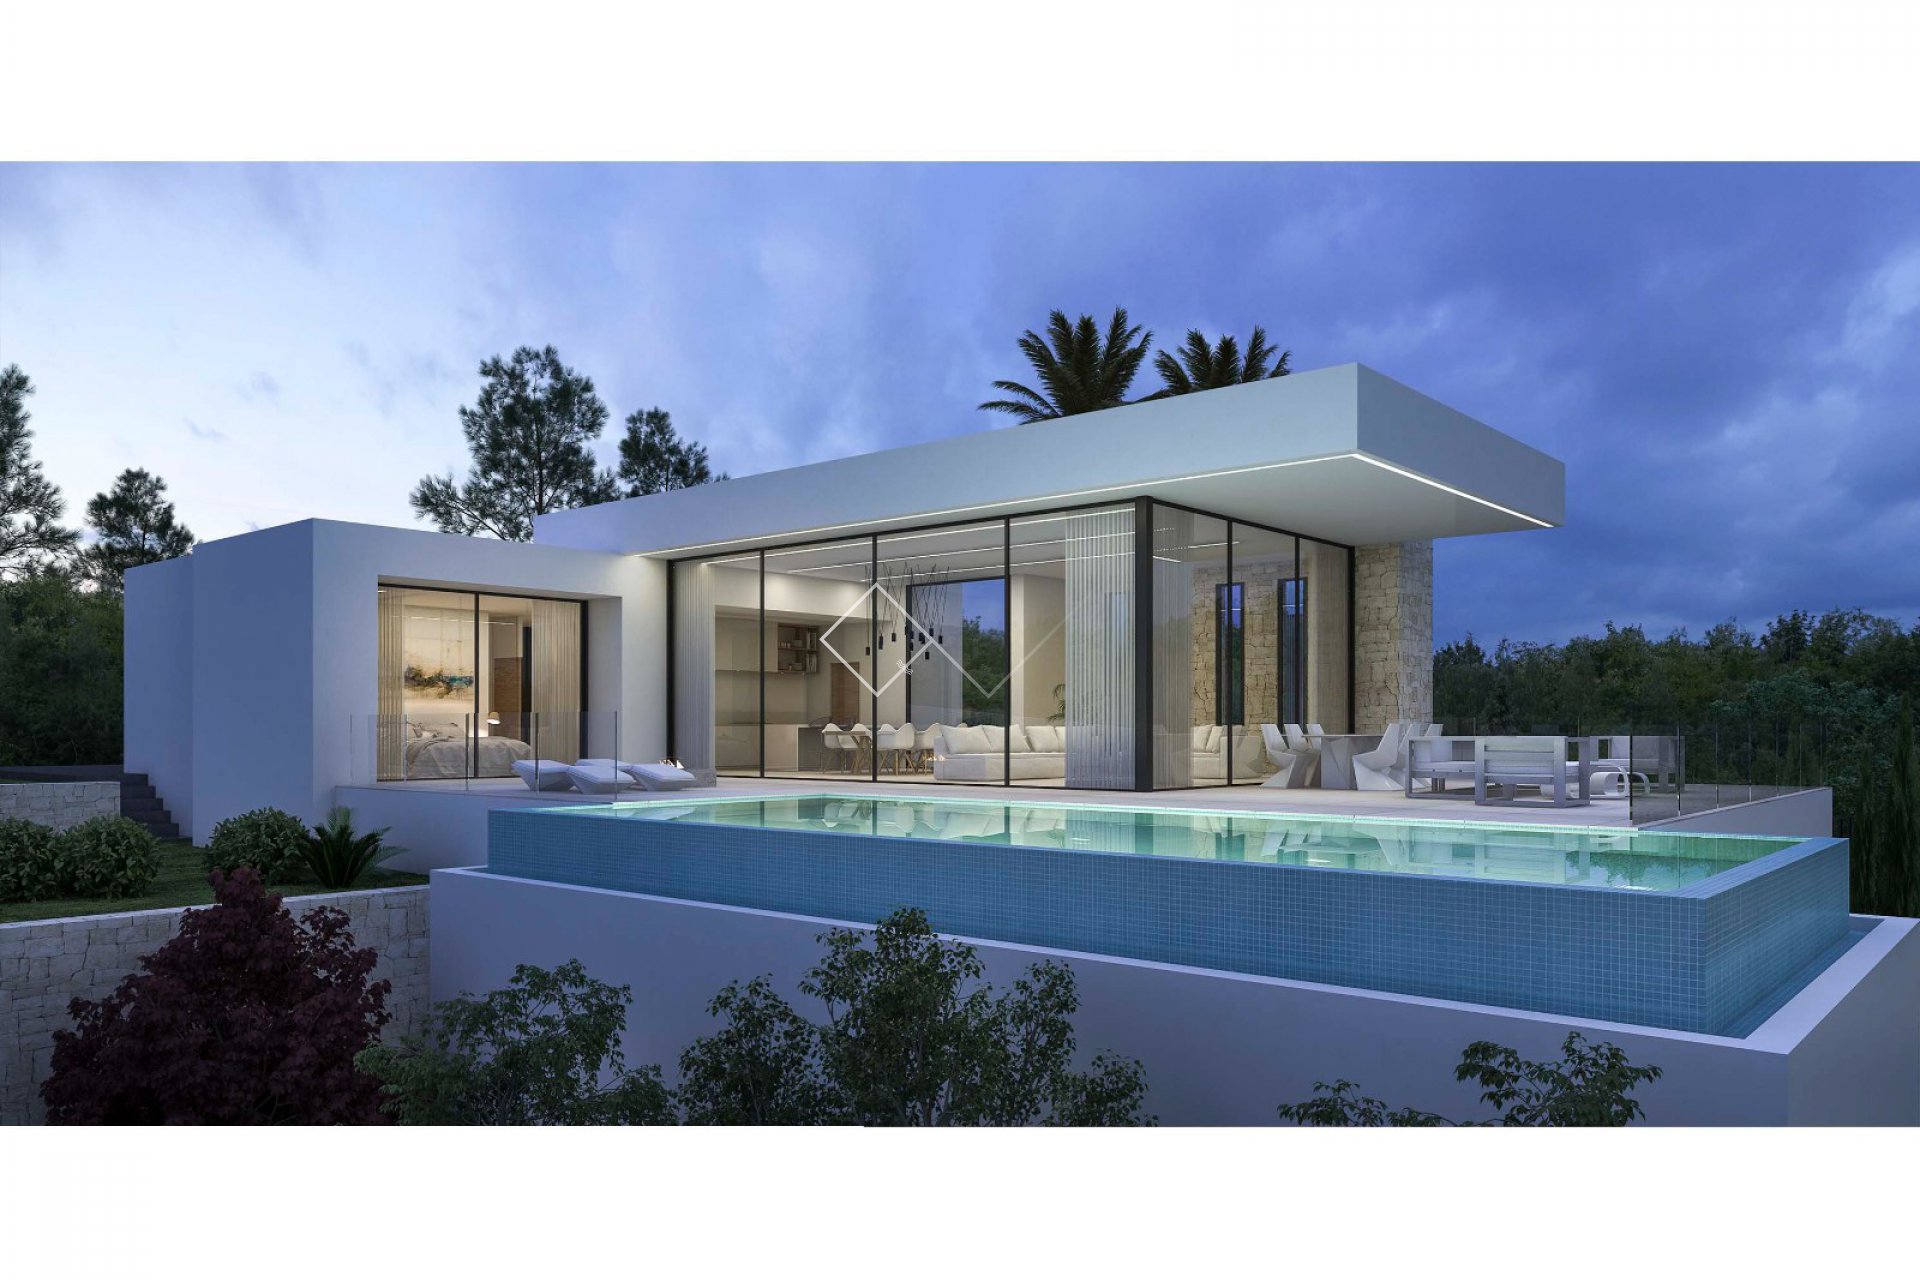 villa and pool - New project for stunning modern villa in Fanadix, Moraira